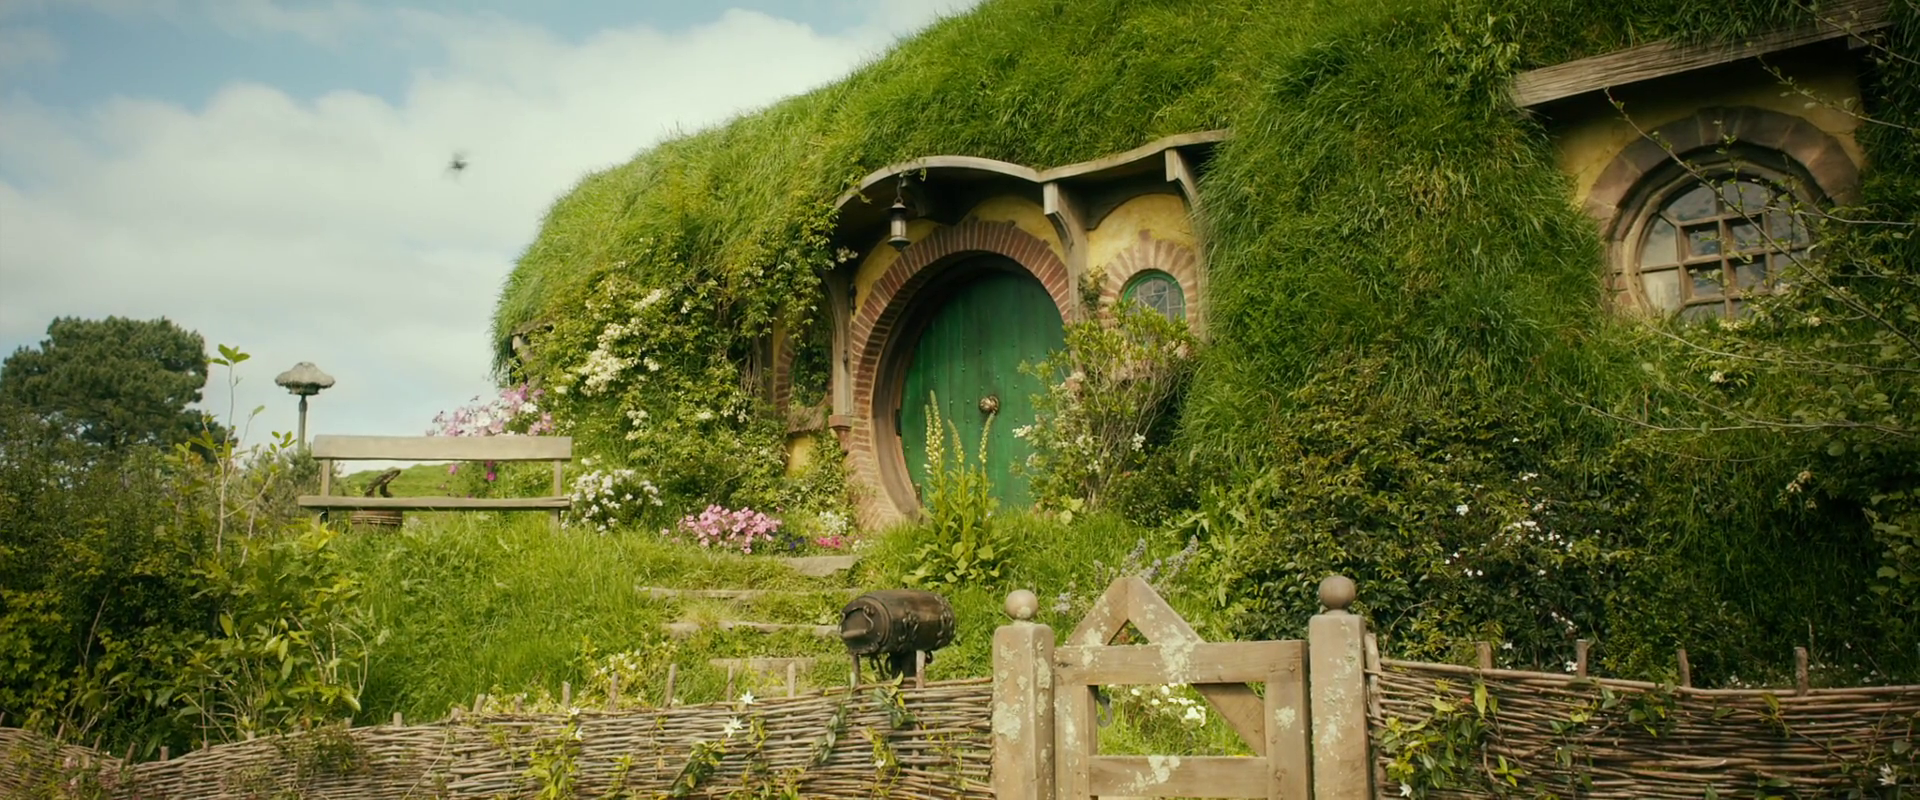 🍃 The Hobbiton Movie Set 🍃